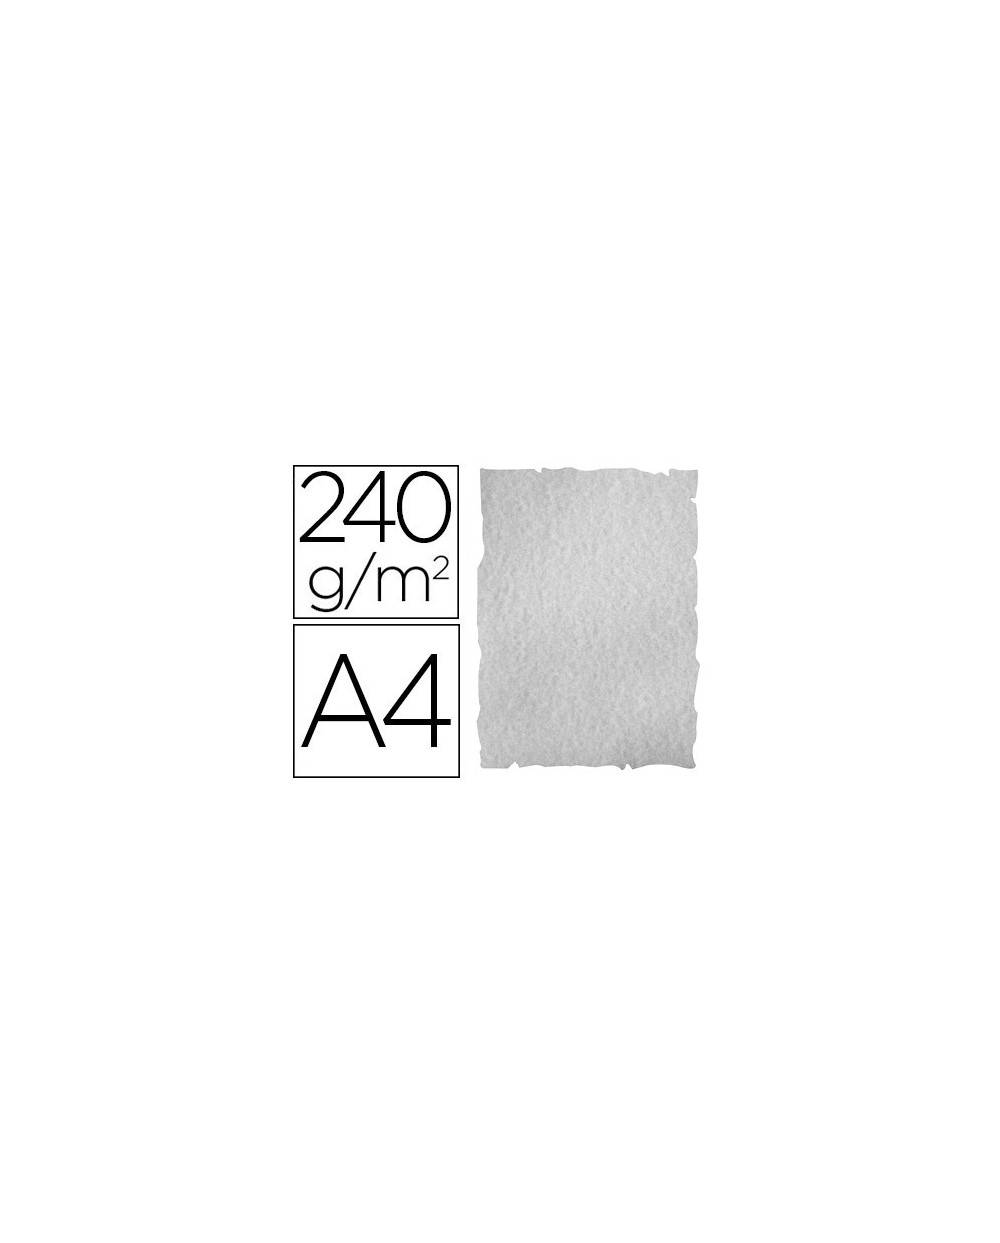 Papel color liderpapel pergamino con bordes a4 240g m2 gris pack de 10 hojas